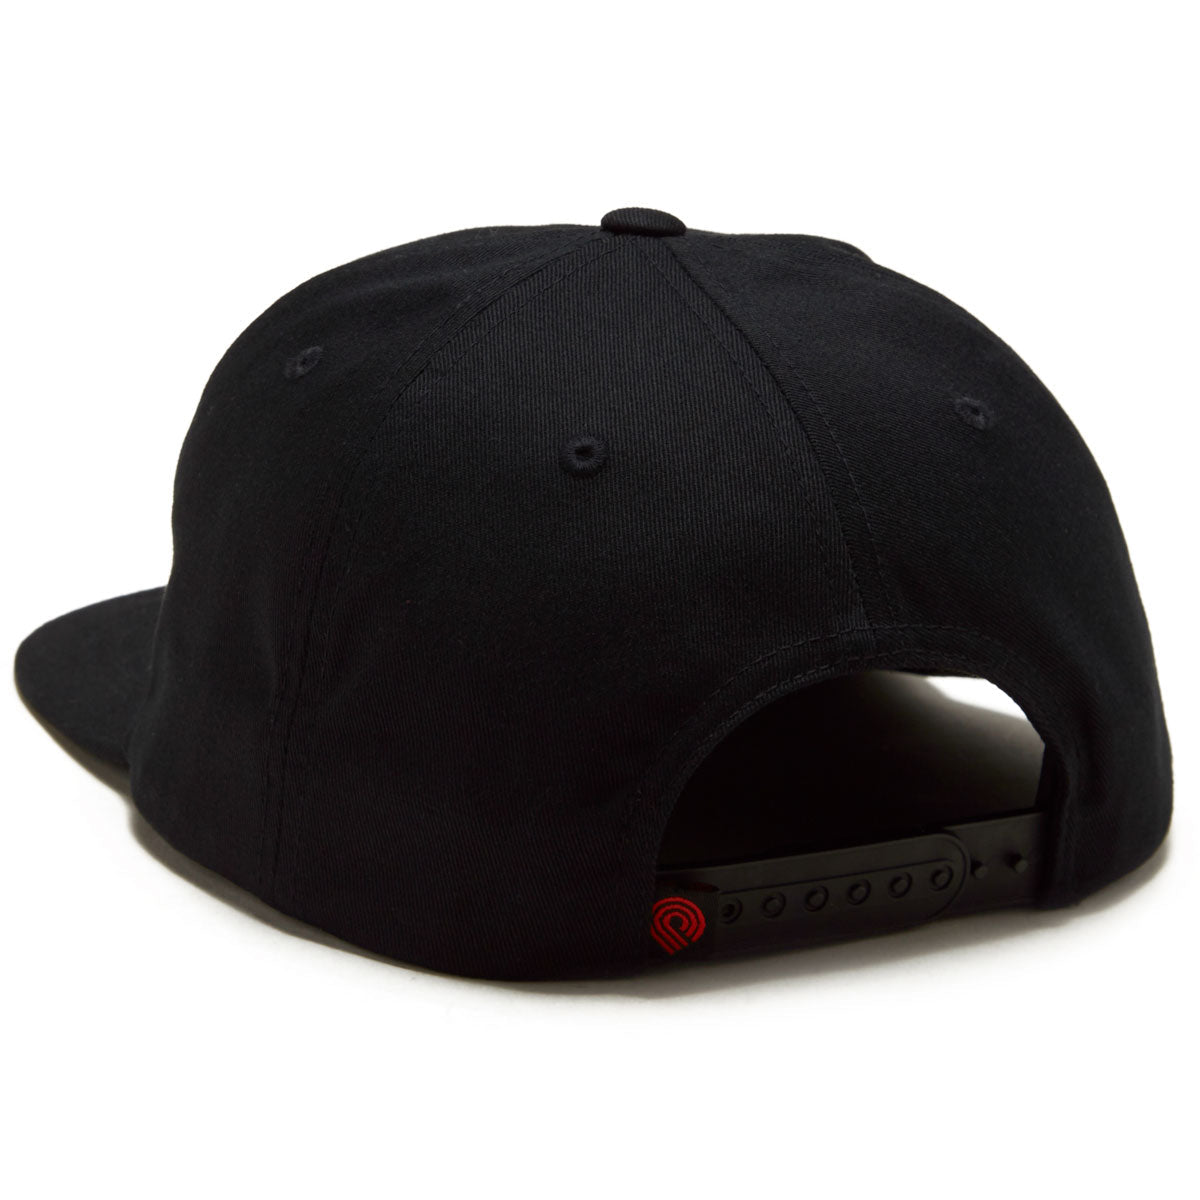 Powell-Peralta Winged Ripper Snapback Hat - Black image 2